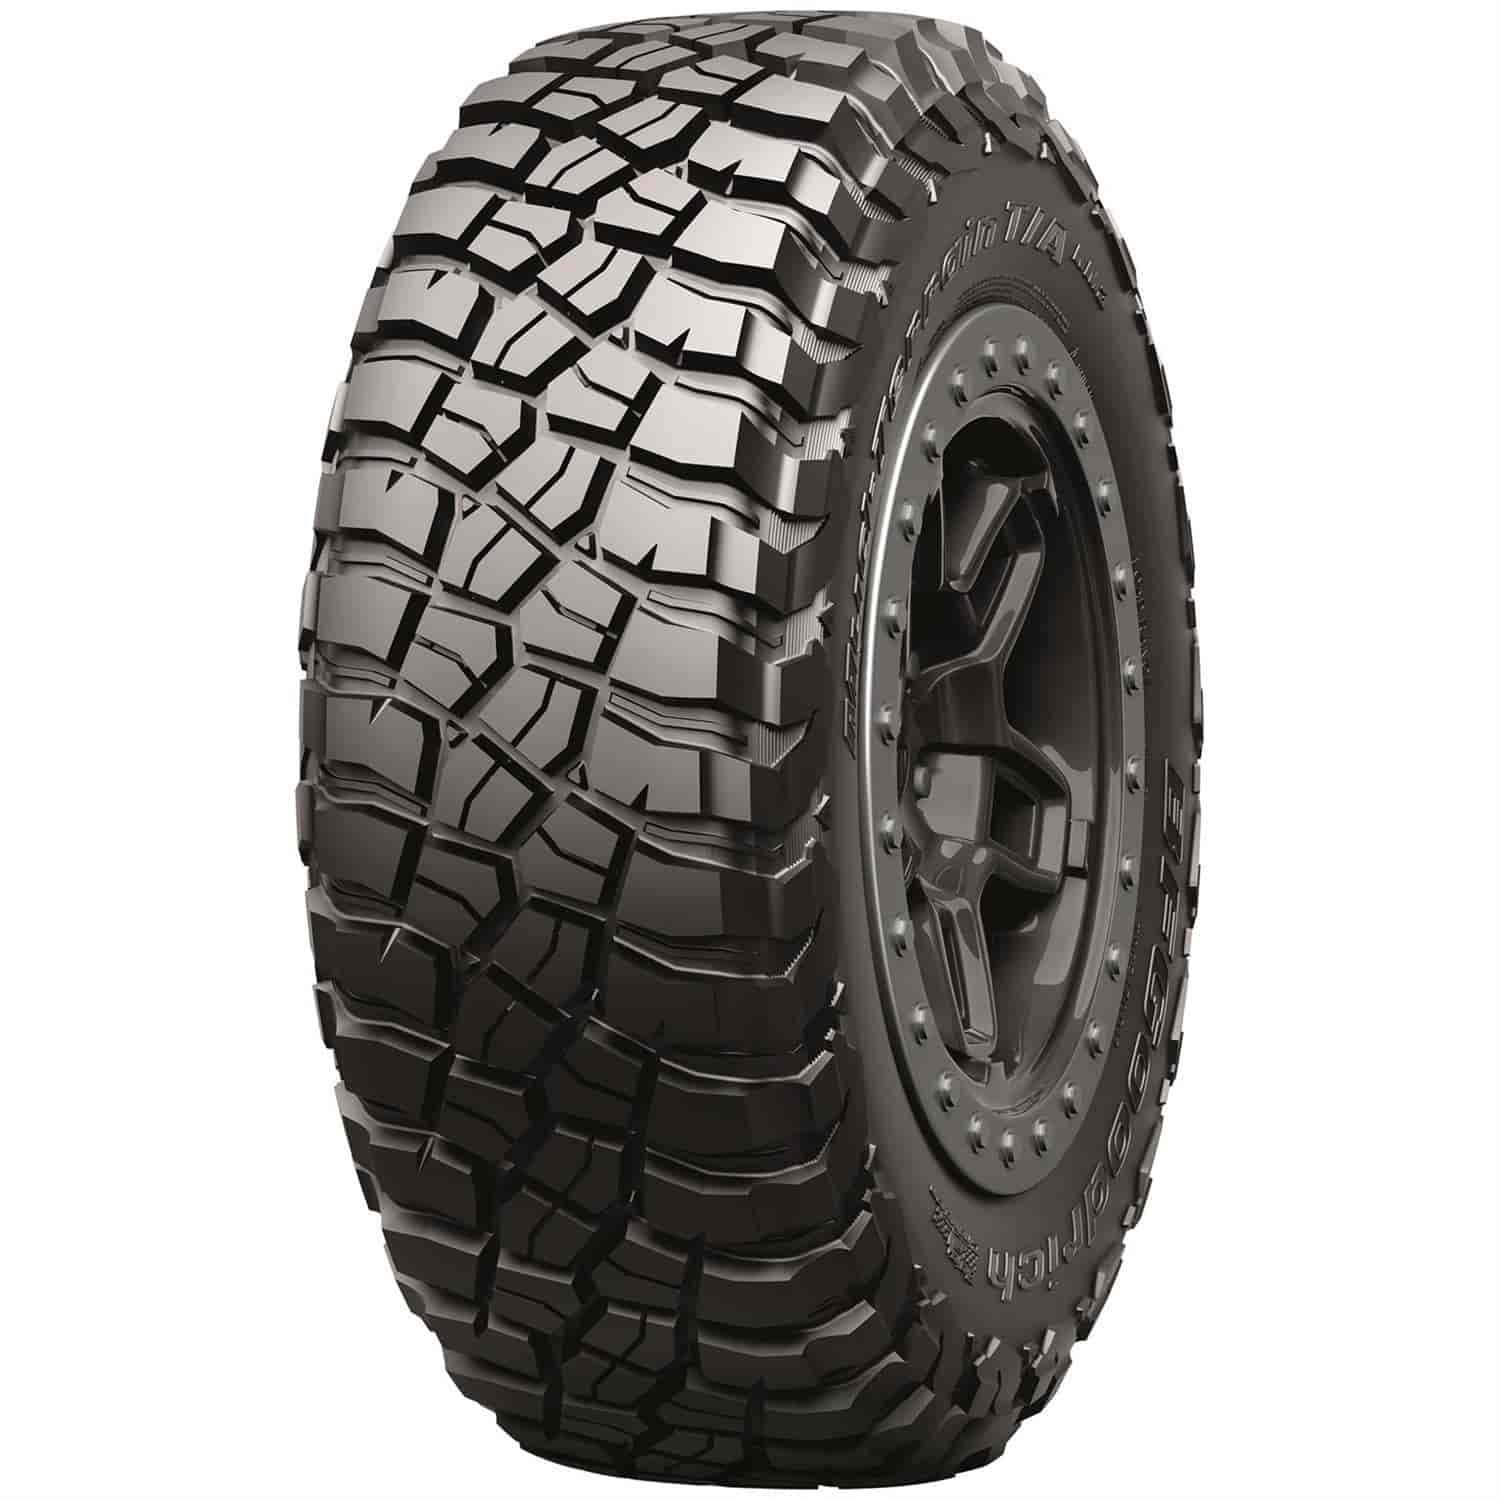 Mud-Terrain T/A KM3 Tire 33 x 12.50R15/C 108Q RWL